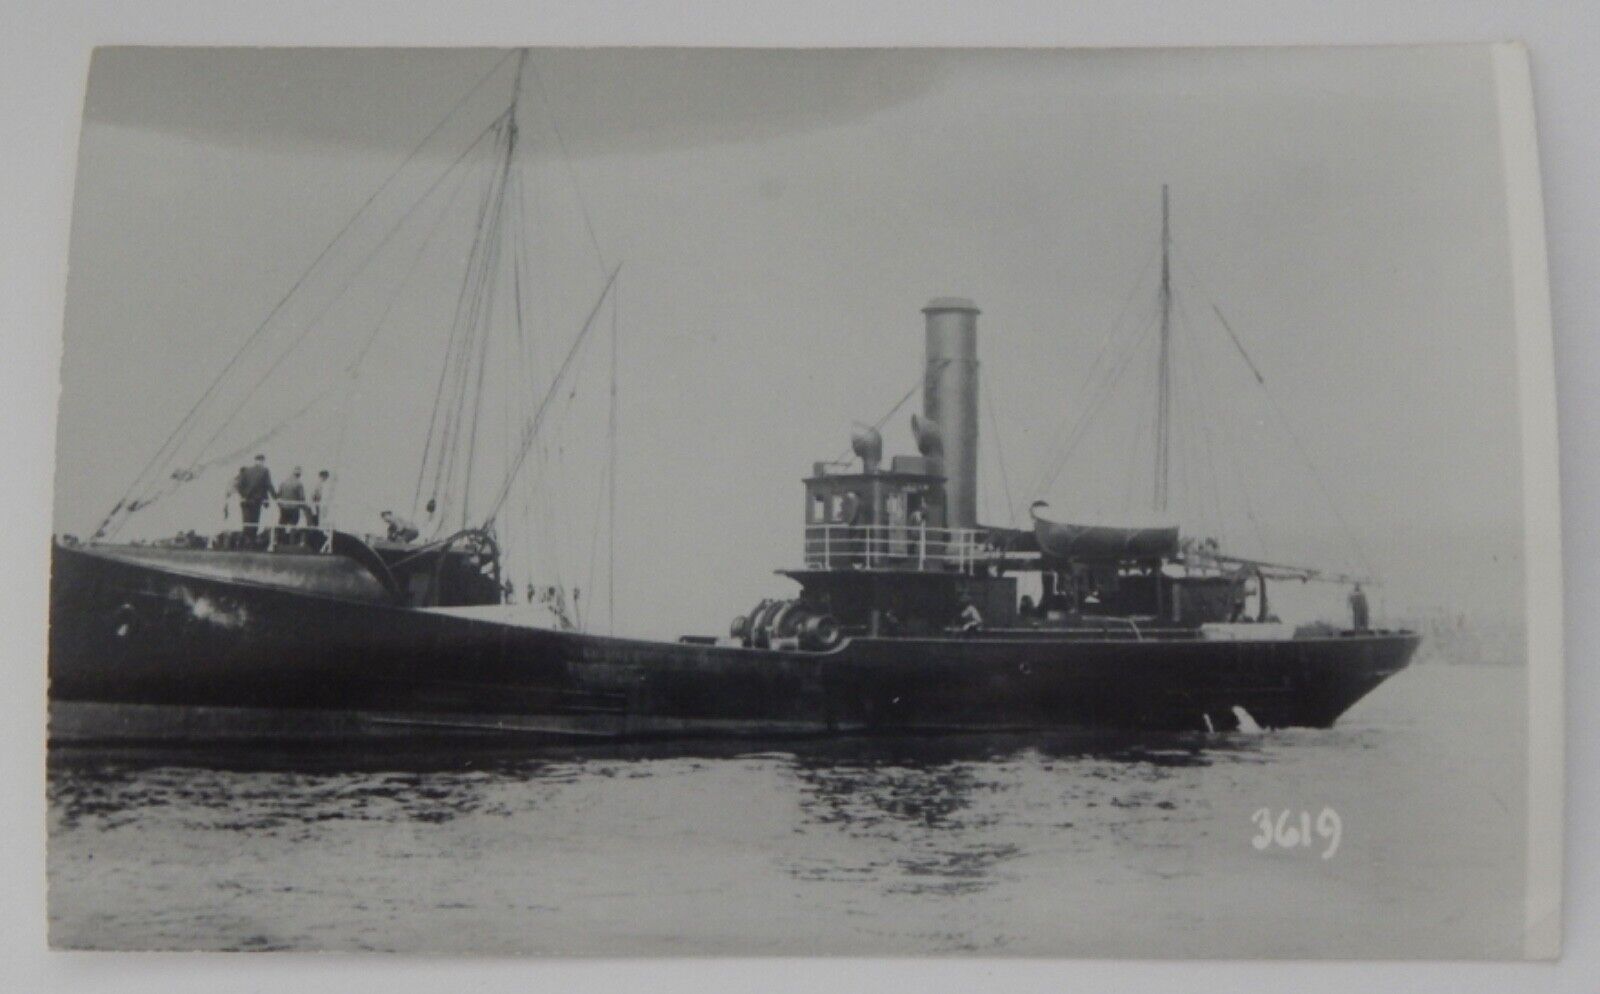 Steamship Steamer FOAM real photo postcard RPPC